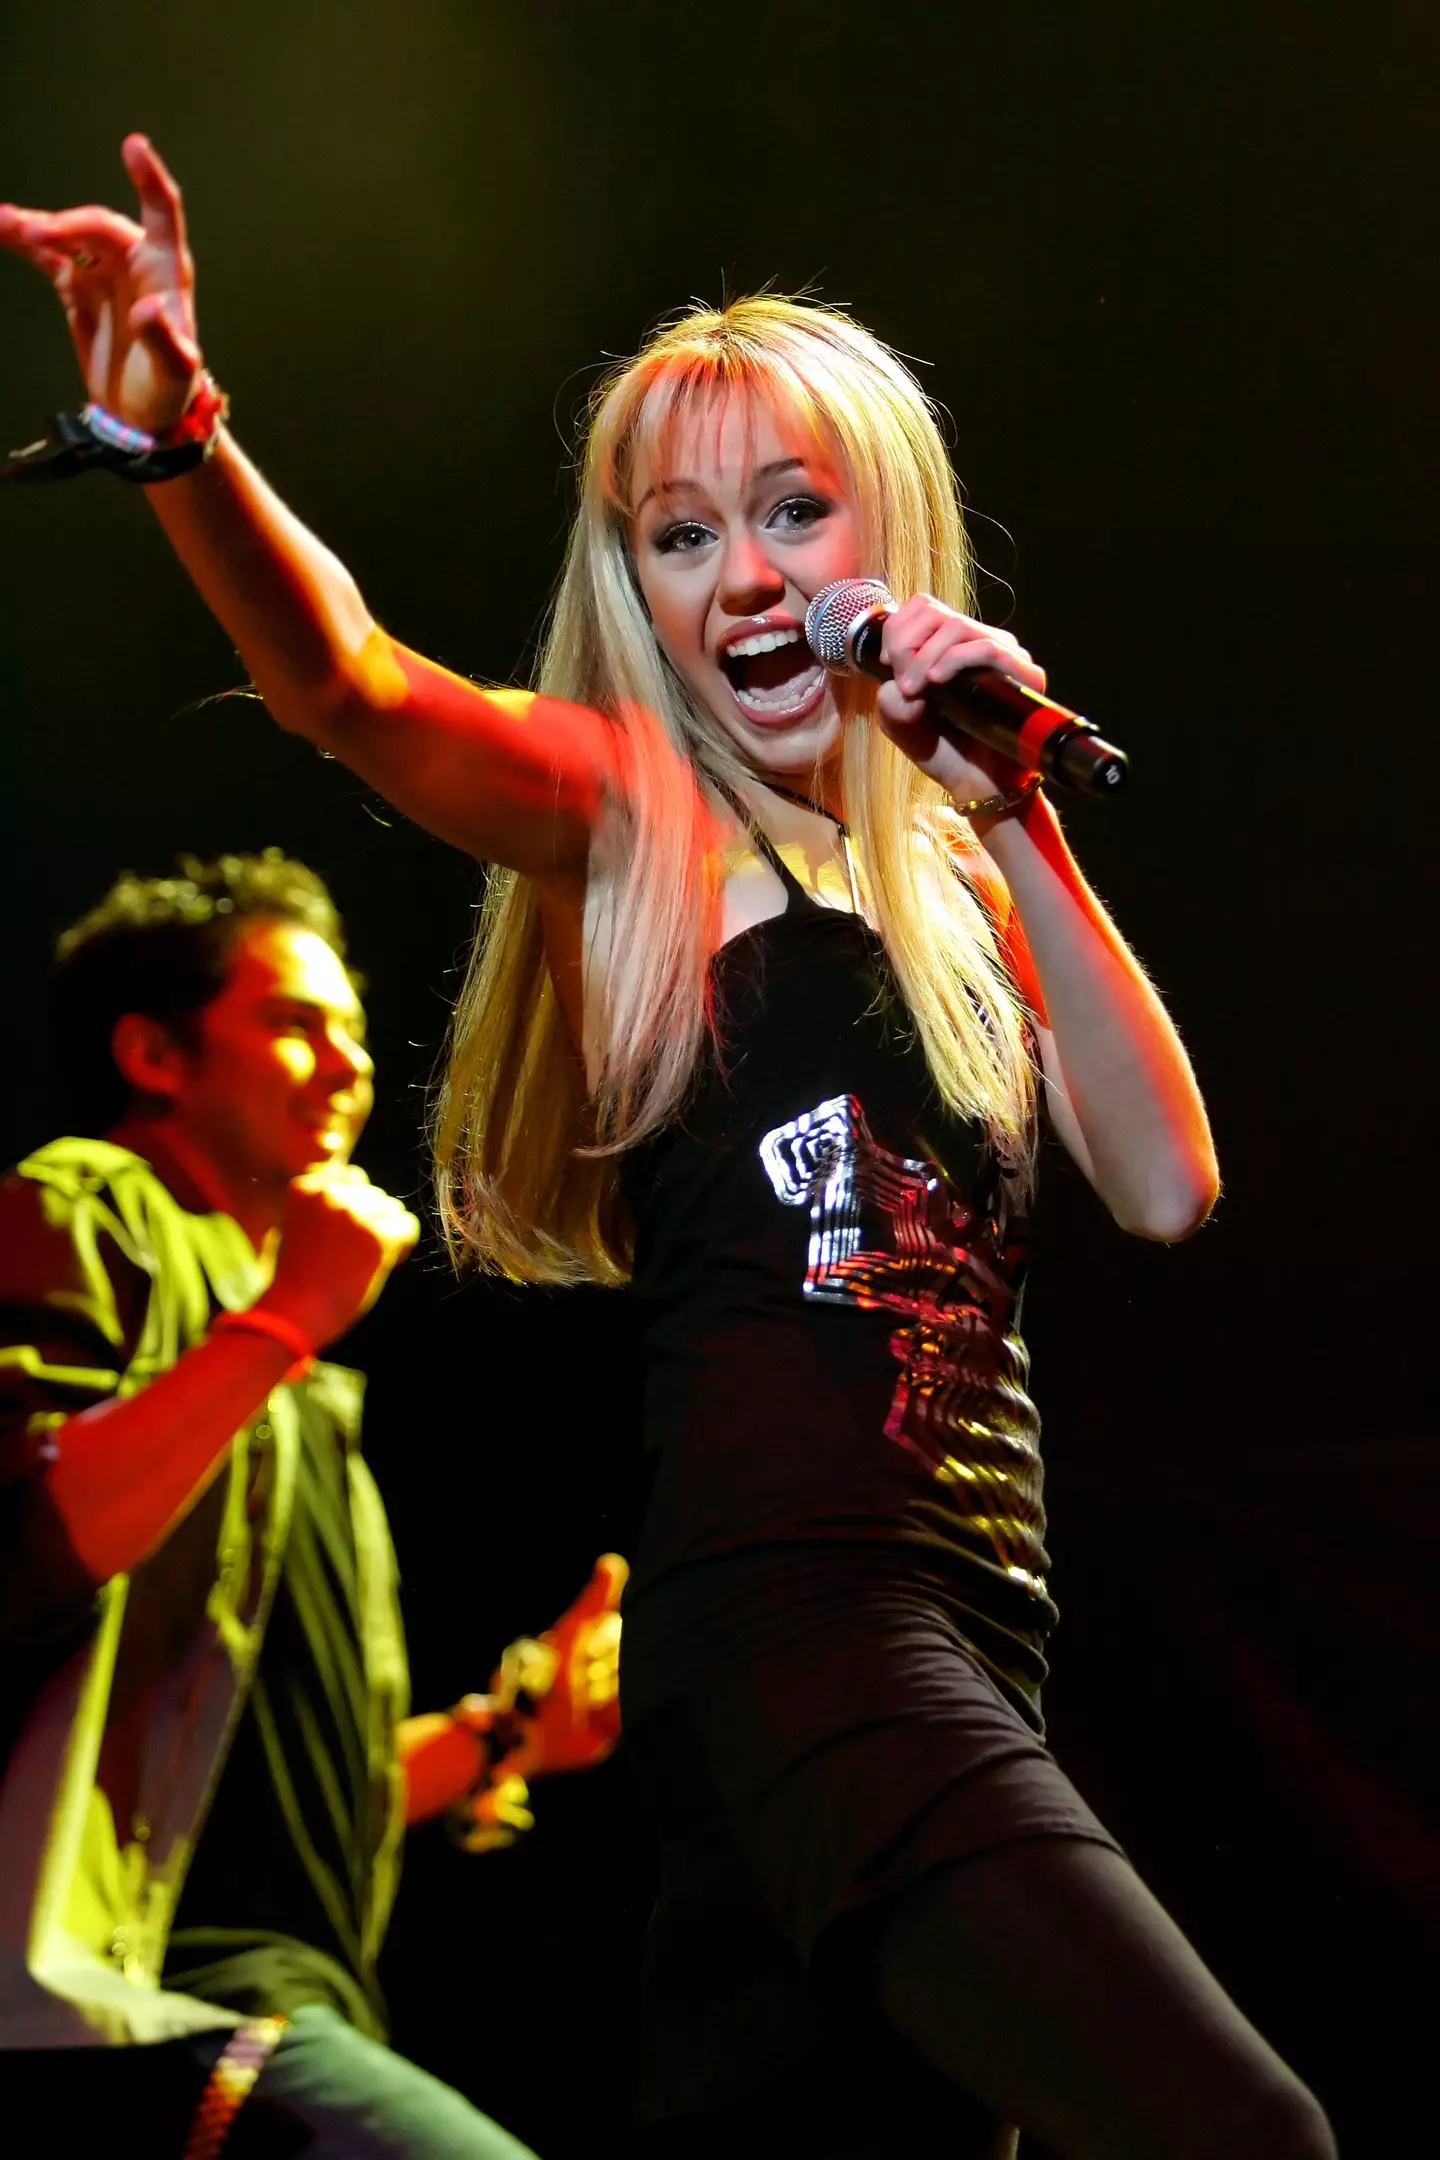 Miley Cyrus performing as Hannah Montana in 2006.